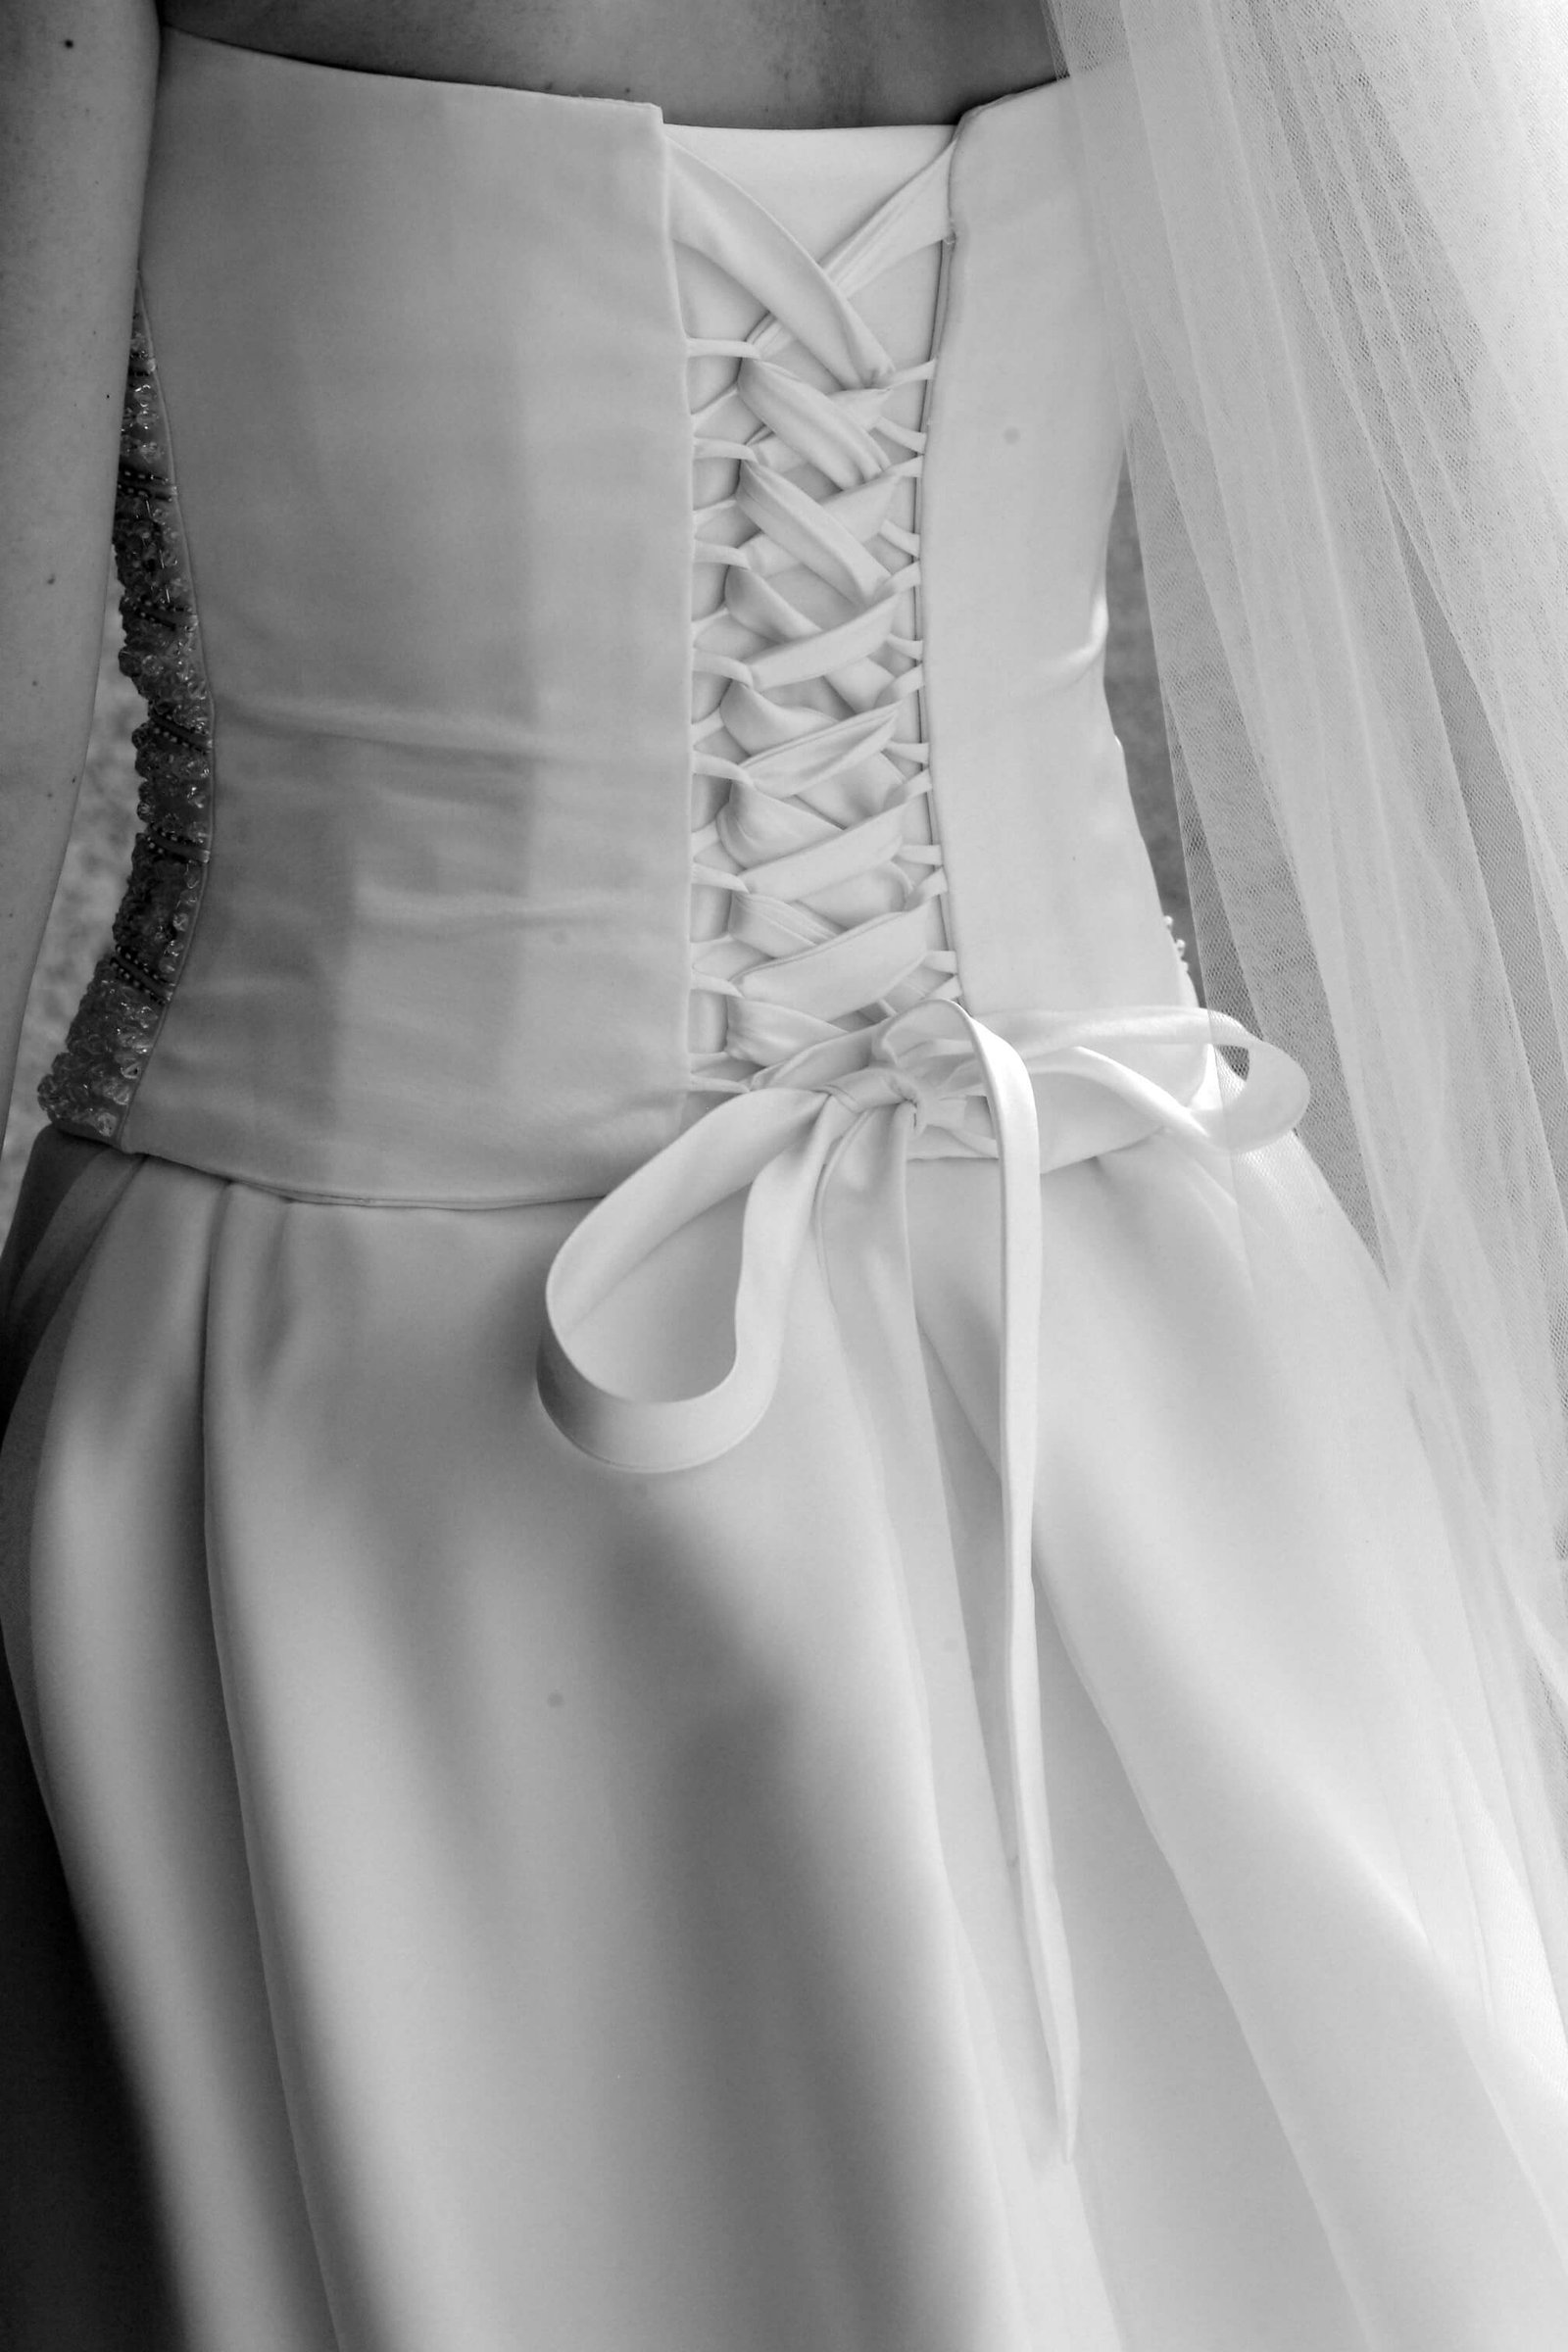 ajustement de robe de mariée québec 